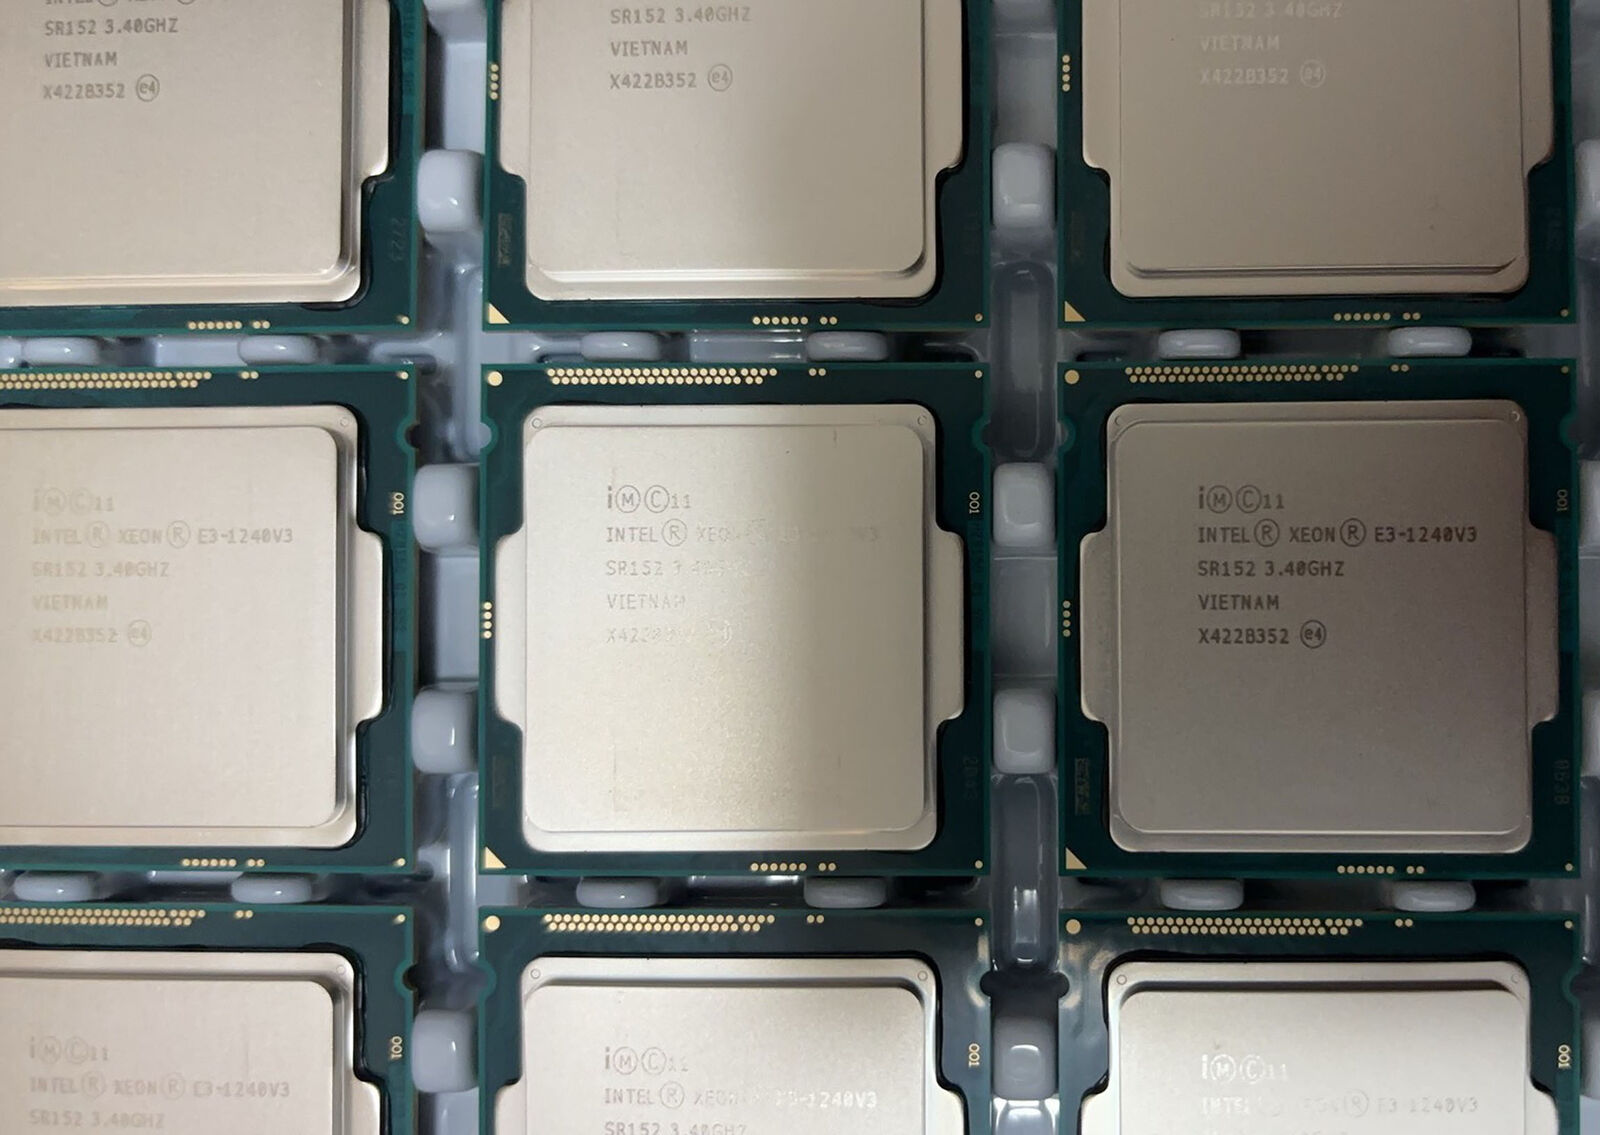 Intel Xeon E3-1240 V3 3.40GHz 4-core 8-thread 8MB LGA1150 CPU processor